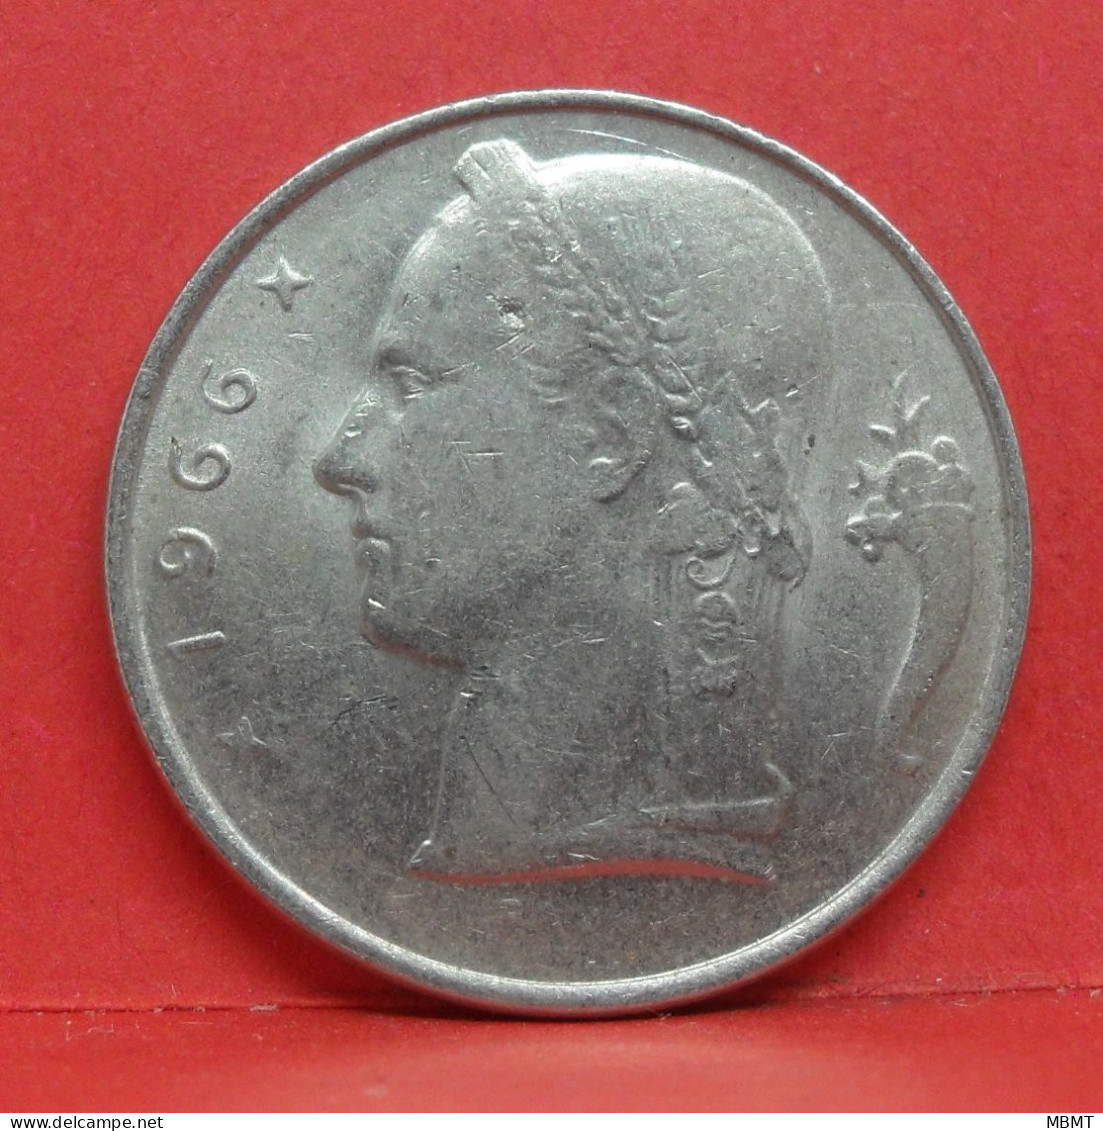 5 Frank 1966 - TTB - Pièce Monnaie Belgie - Article N°1988 - 5 Frank